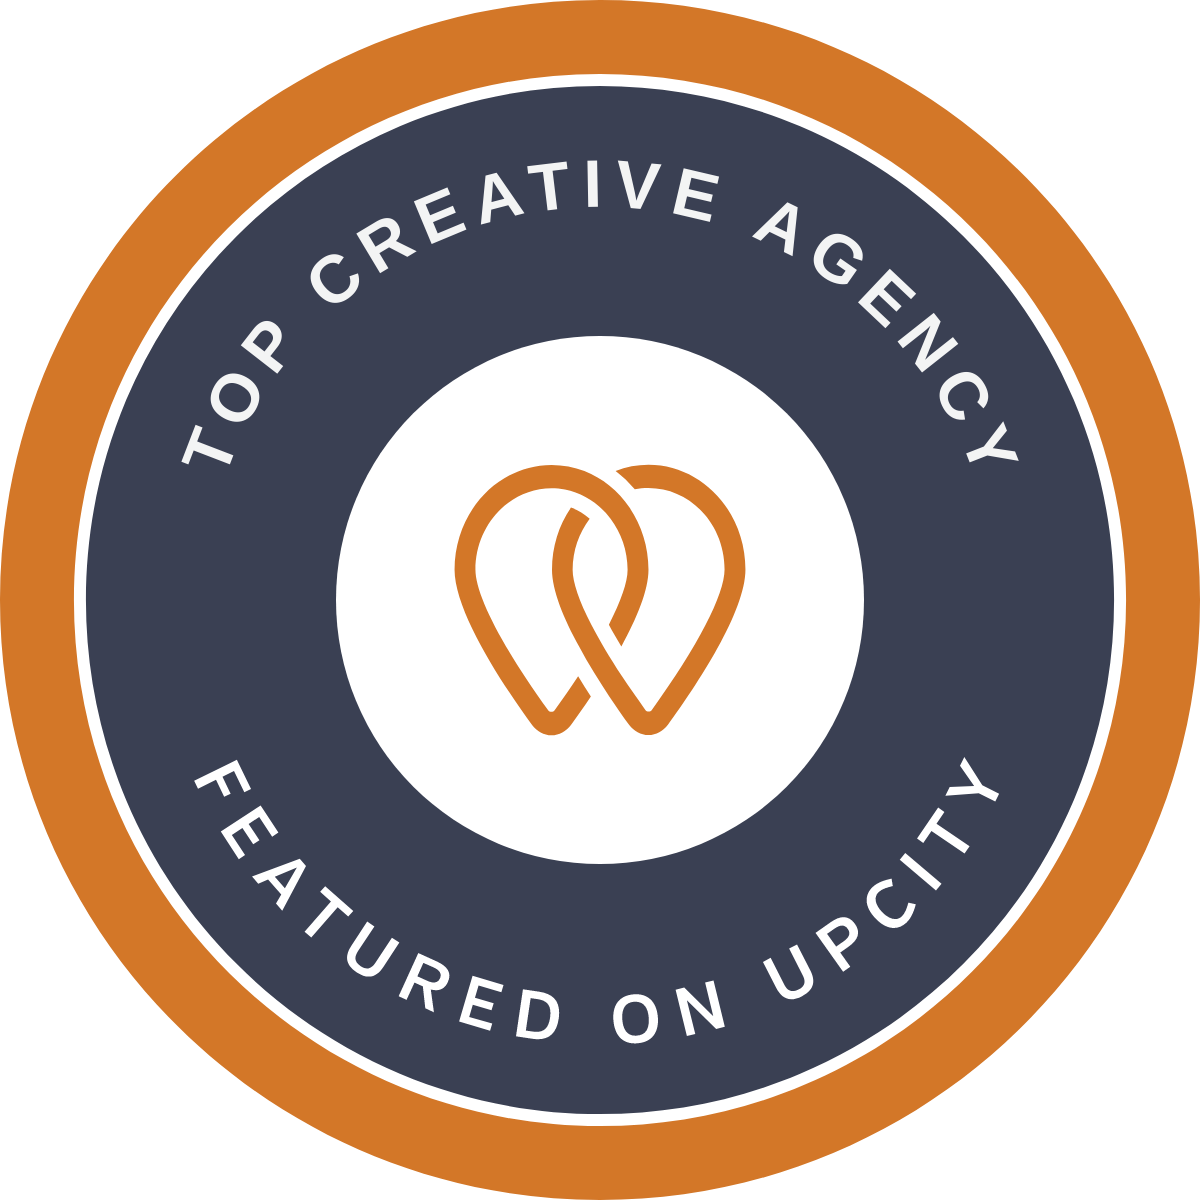 Hamilton, Ontario, Canada agency CodeMasters Agency wins Top Creative Agency award